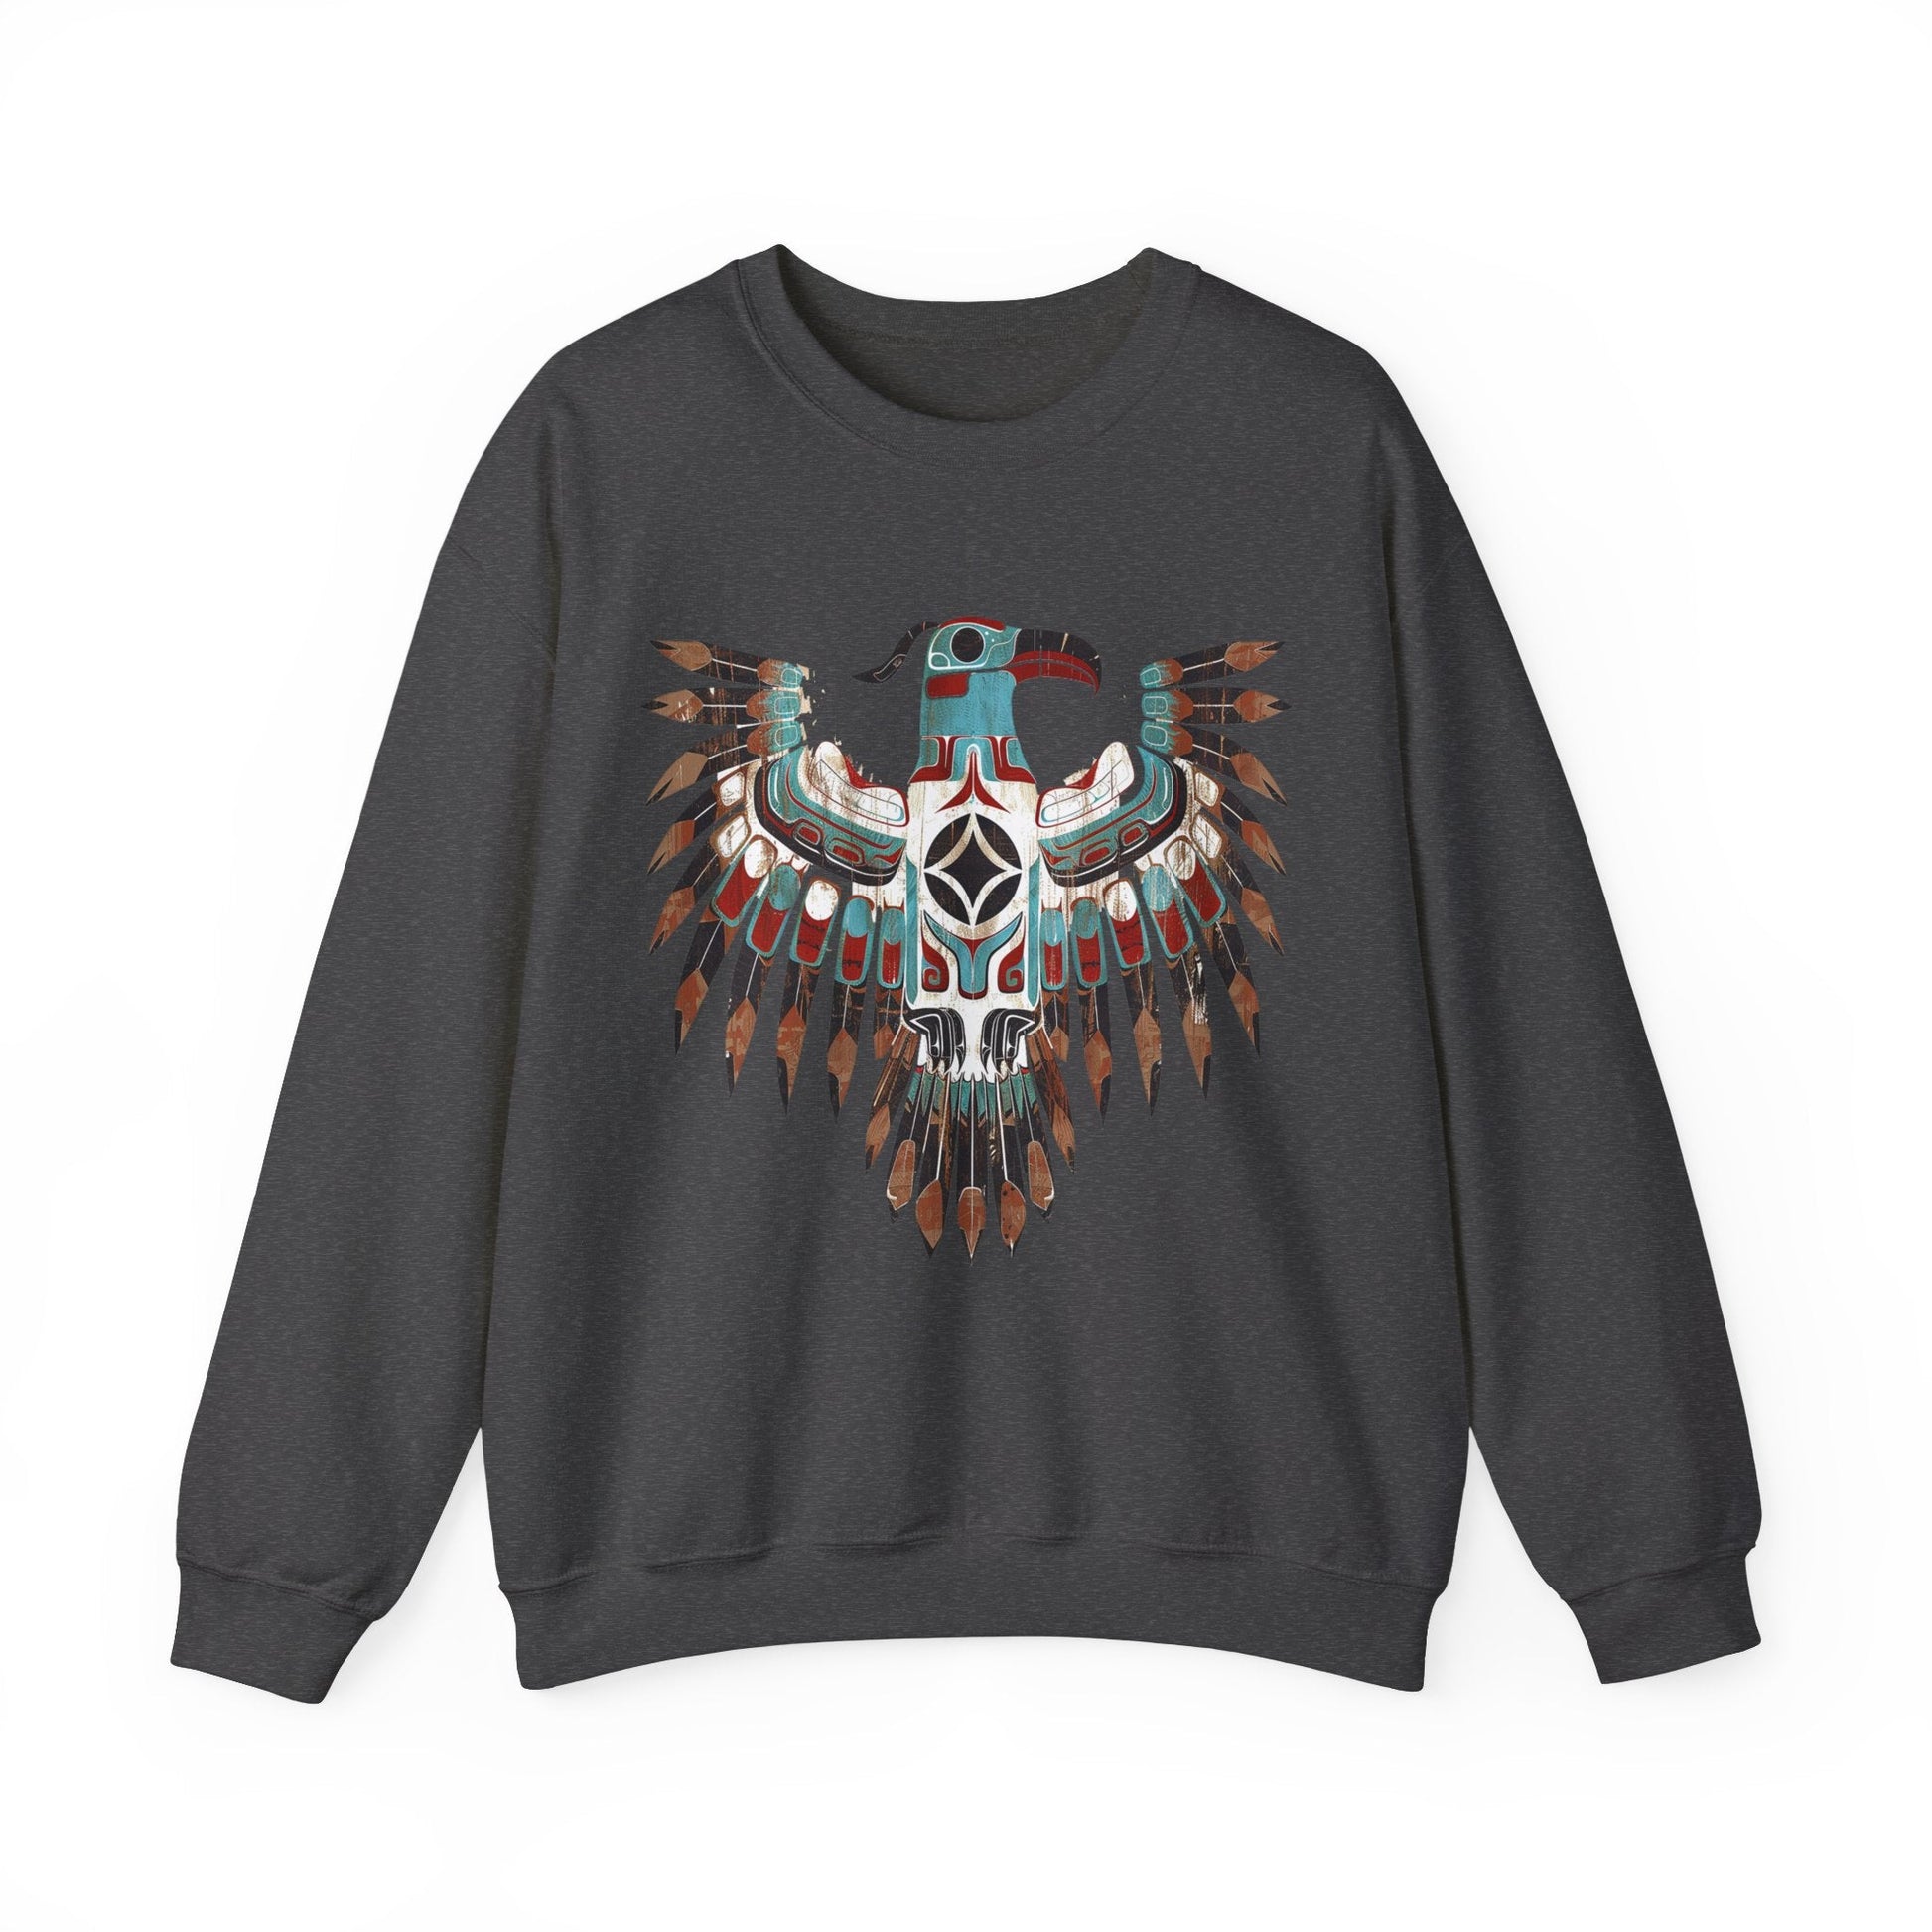 Native American Sweatshirt, Thunderbird Southwestern cccccbkviitnckigttvrkcgrngjccrrcerfggehcncliArt - FlooredByArt